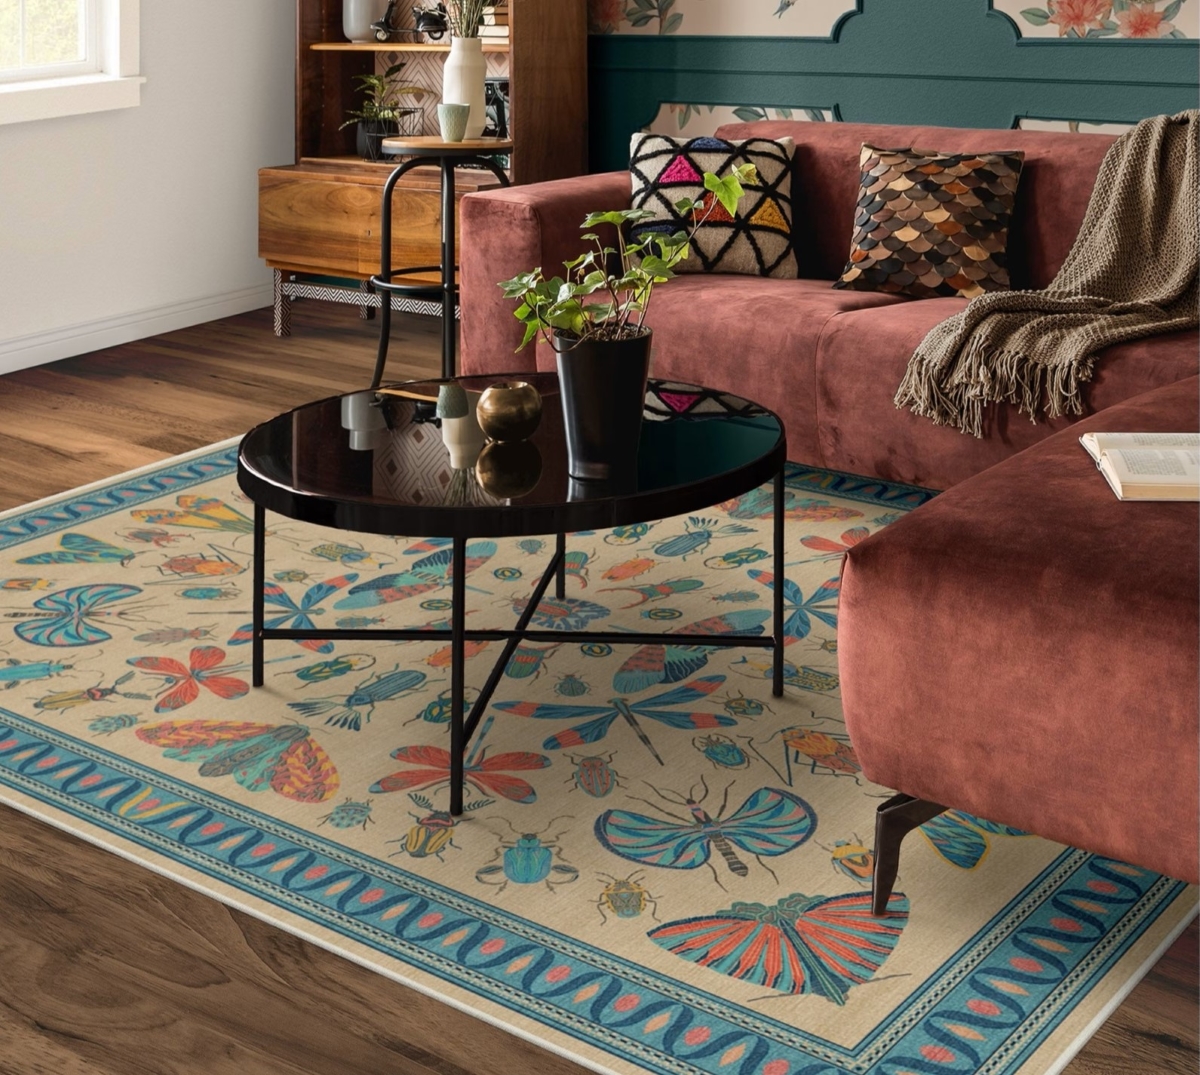 Multicolor rug in colorful living area.